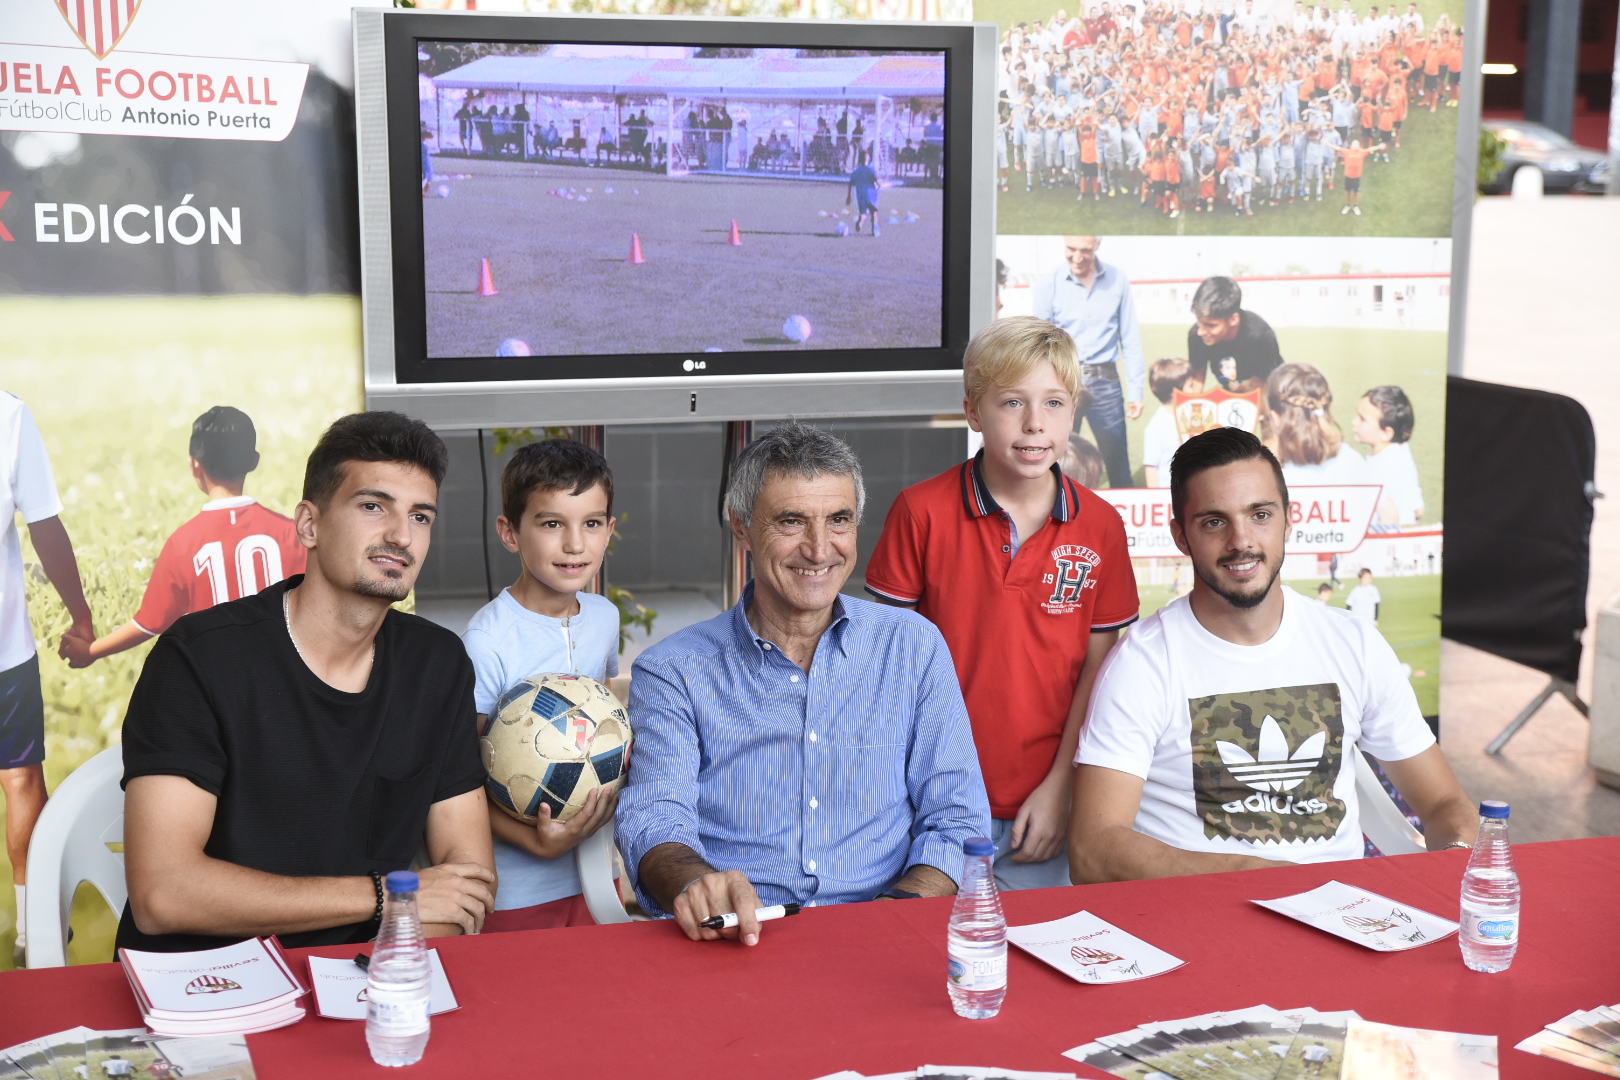 Alex Muñoz, Antonio Álvarez and Pablo Sarabia at the Antonio Puerta School signing